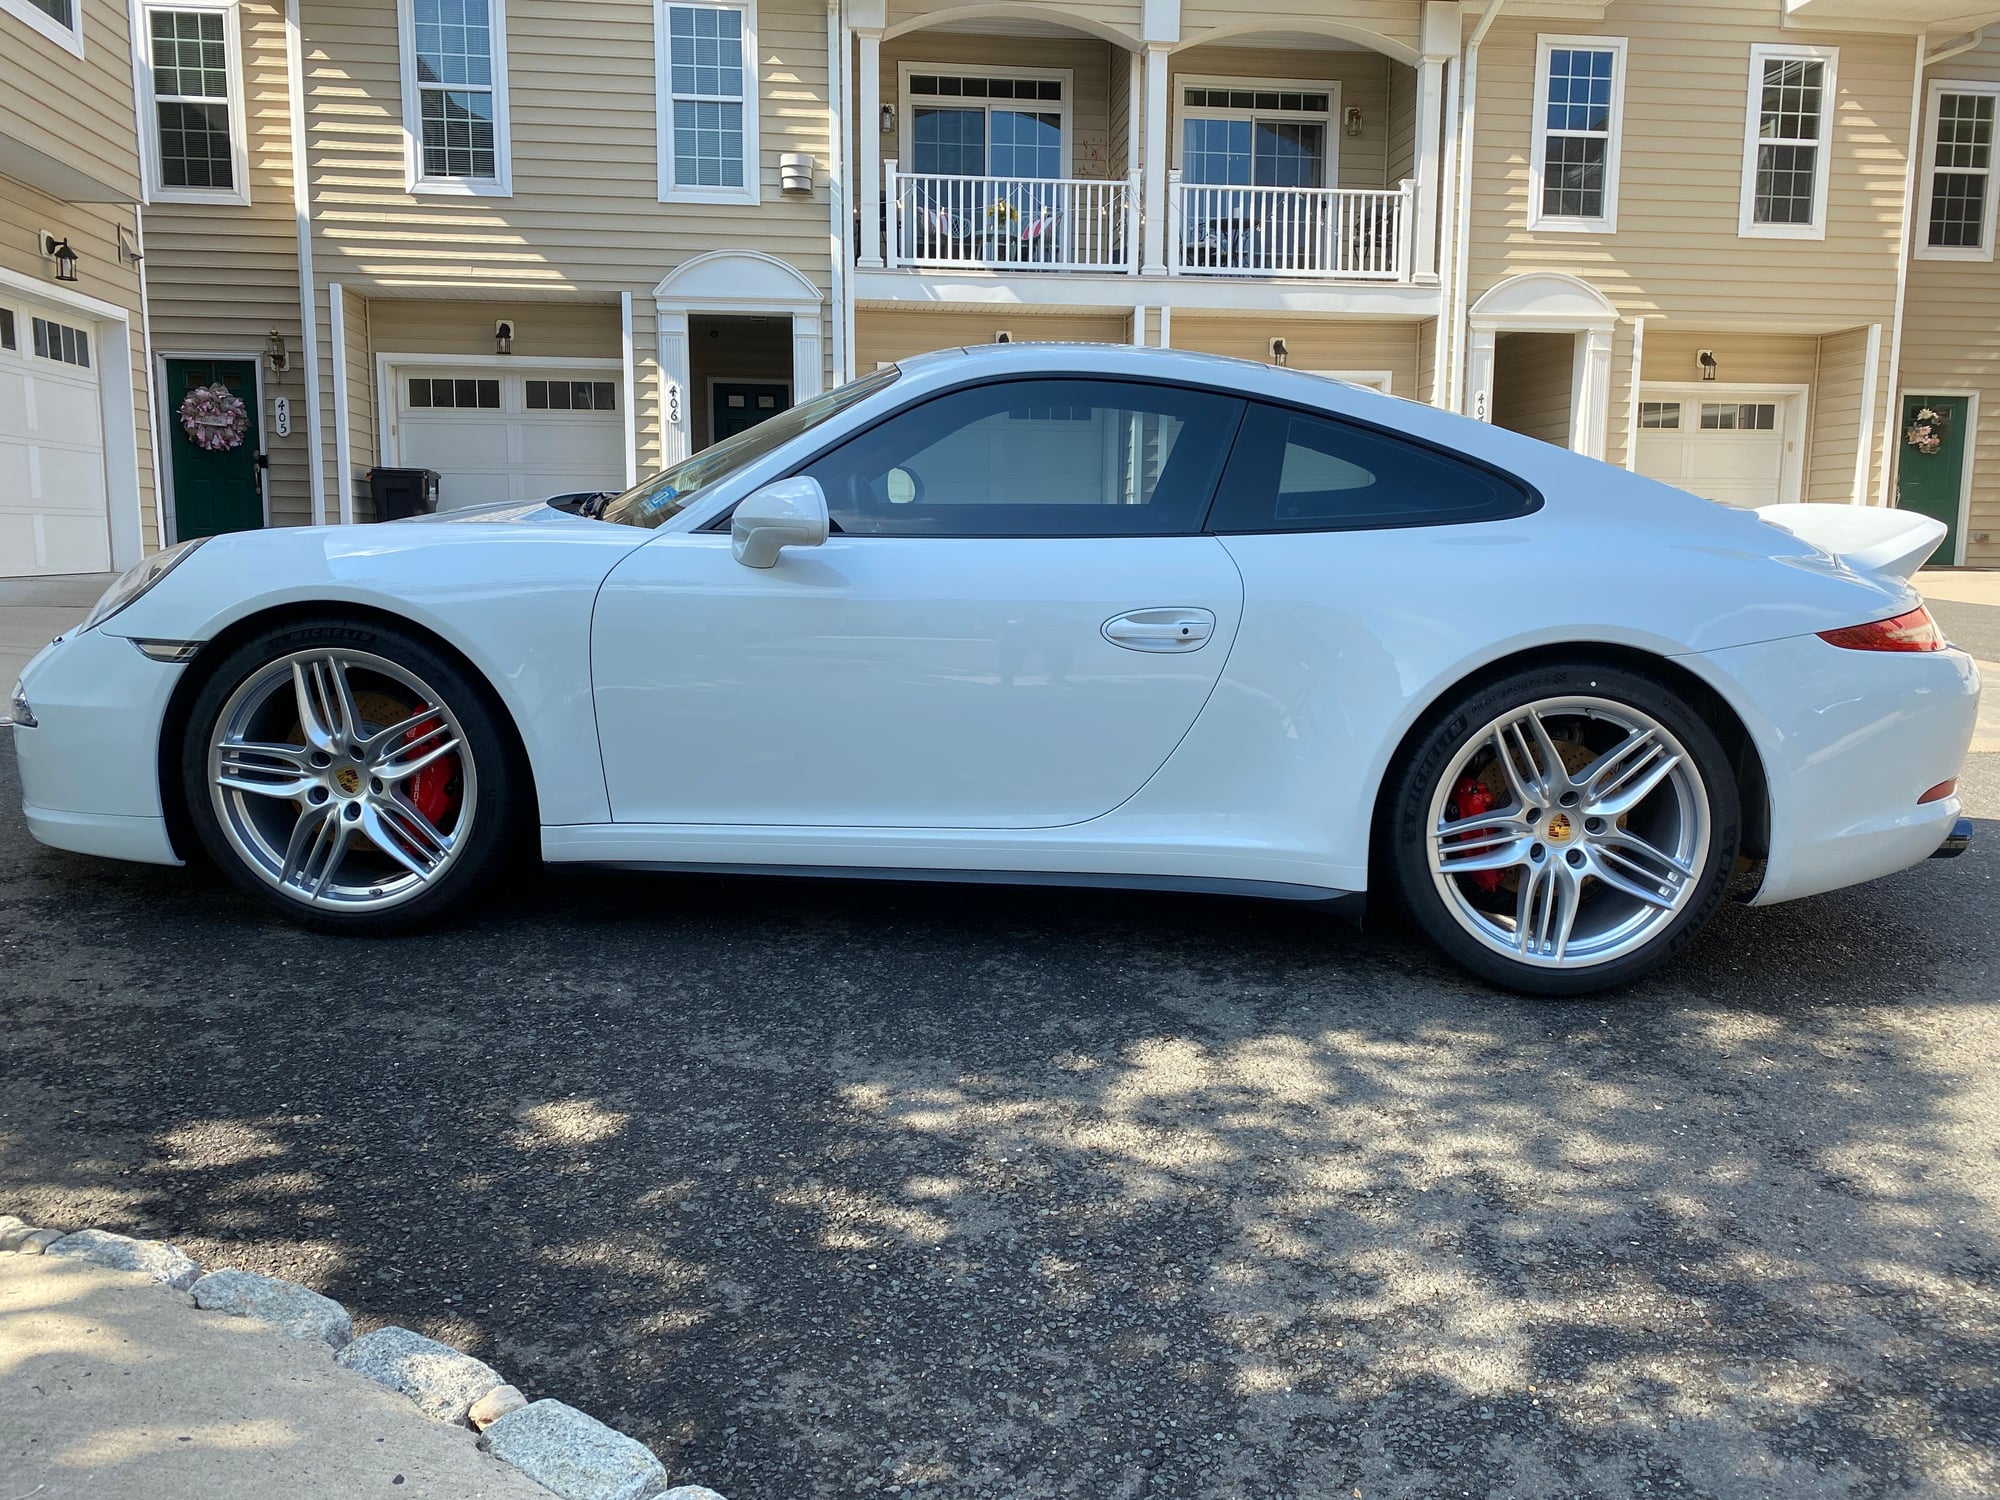 2015 Porsche 911 - 2015 Porsche 911 C4S - SportDesign Ducktail Carrera White CLEAN $134K MSRP - Used - VIN WP0AB2A96FS125895 - 15,593 Miles - 6 cyl - 4WD - Automatic - Coupe - White - Boca Raton, FL 33428, United States